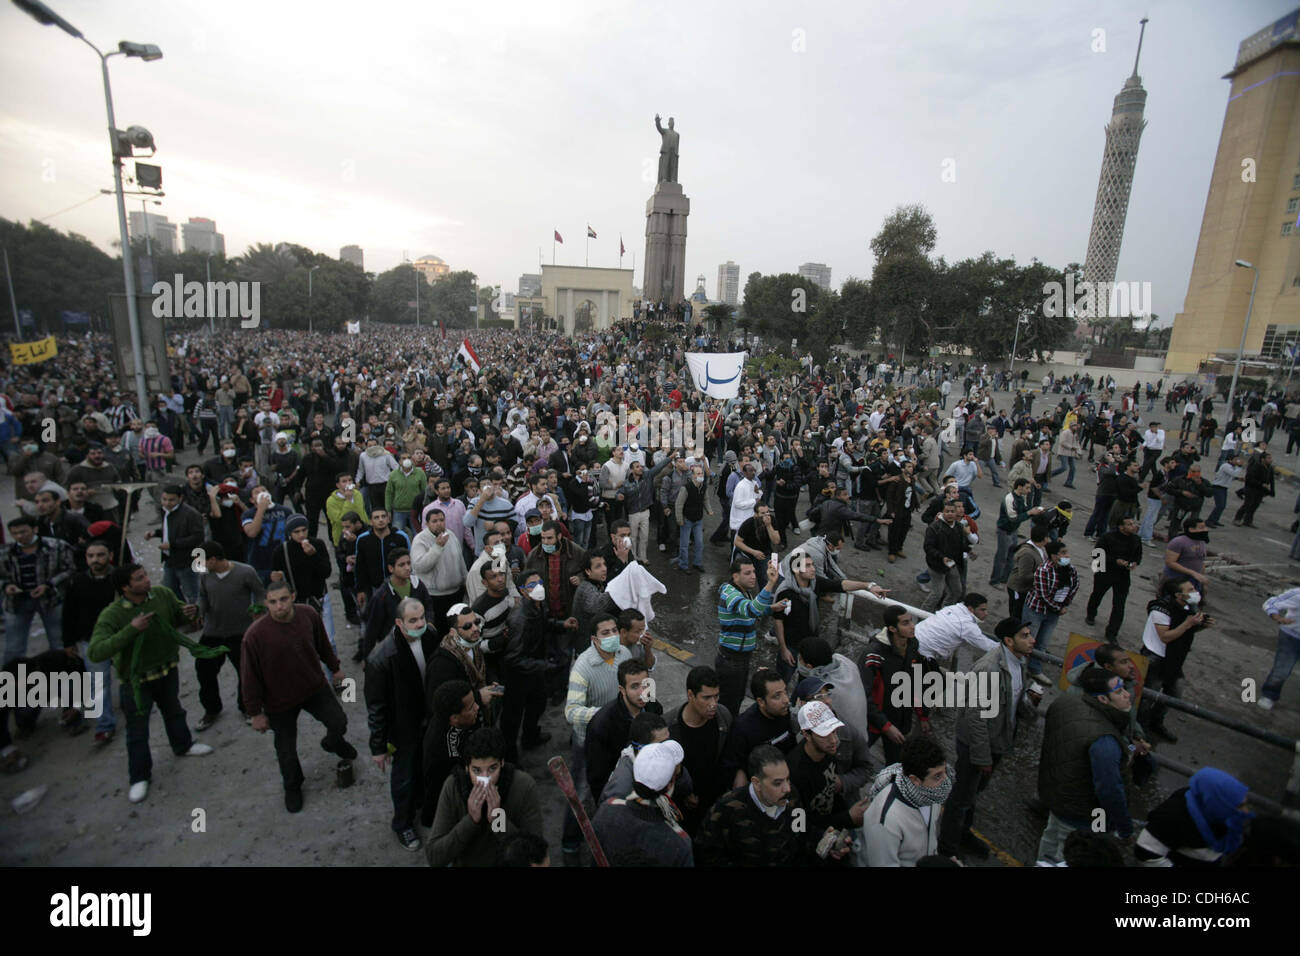 Anti-government protesters demonstrate against president Hosni Mubarak regime in Tahrir, or Liberation Square in Cairo, Egypt, Jan. 29, 2011. Photo by Karam Nasser Stock Photo